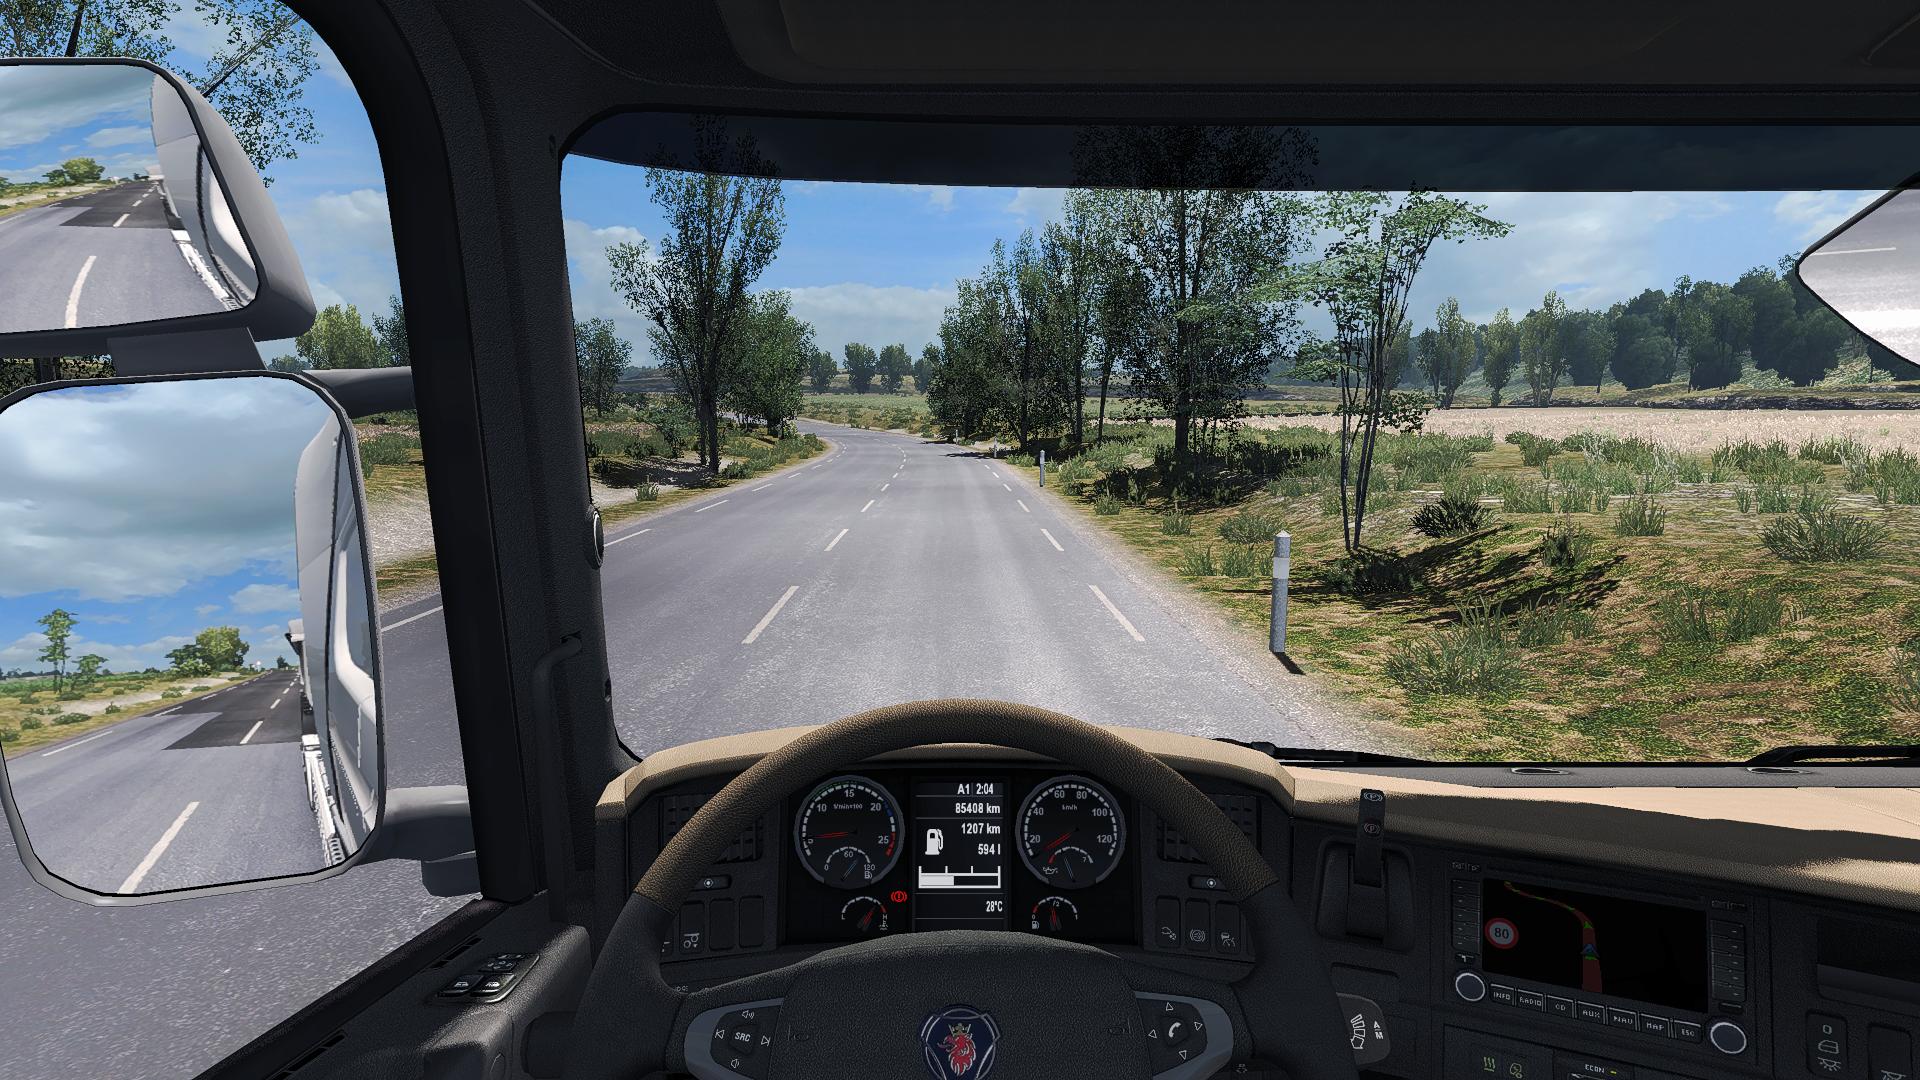 Jbx graphics 2. Realistic етс 2. Euro Truck Simulator Reshade. Етс 2 шейдеры. Драйв симулятор 2.